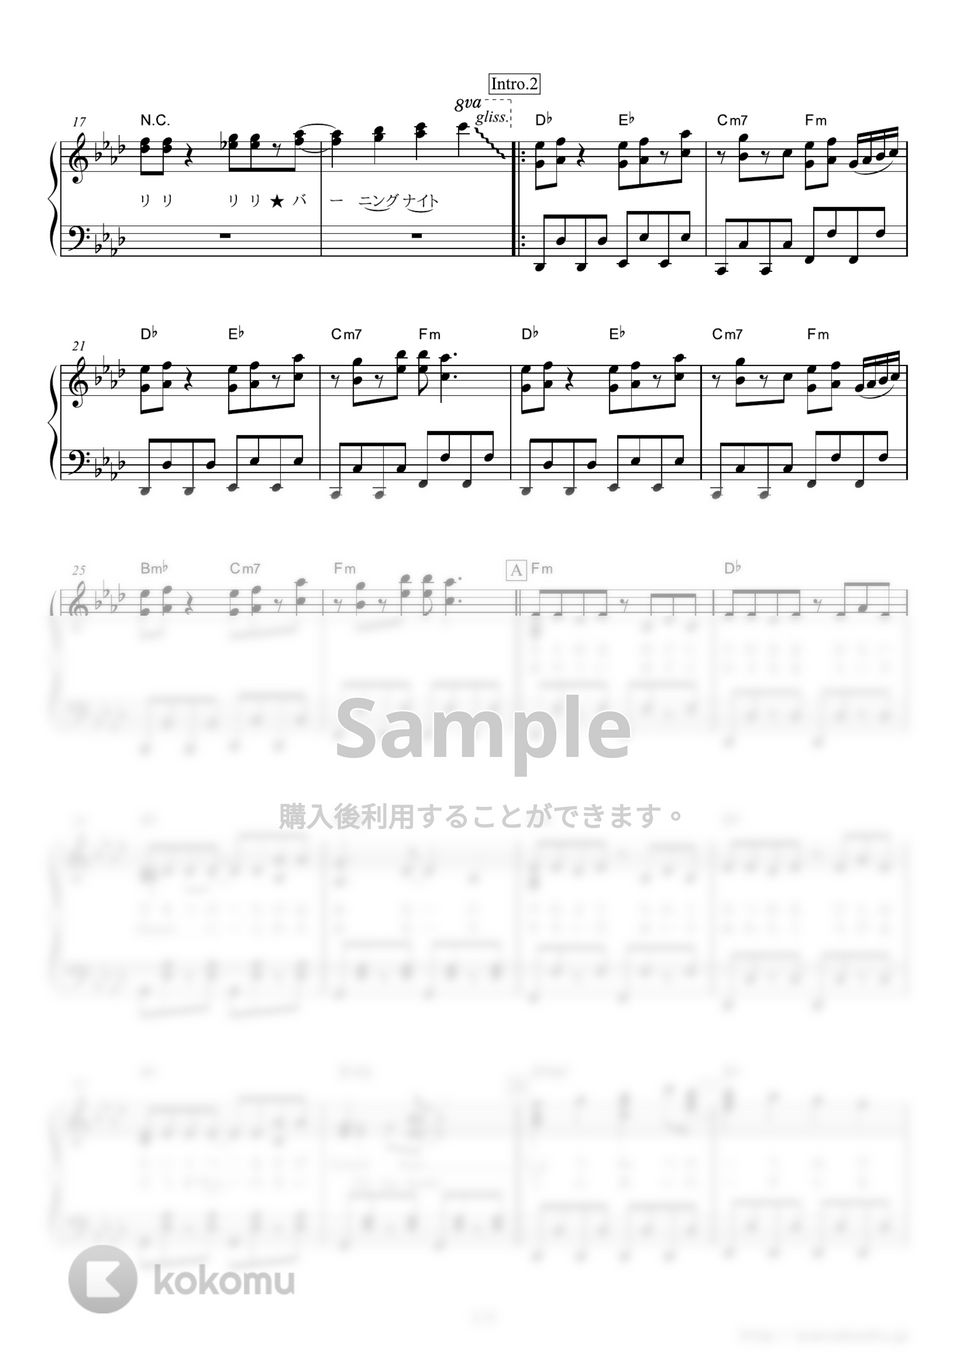 samfree - リリリリ★バーニングナイト by ピアノの本棚